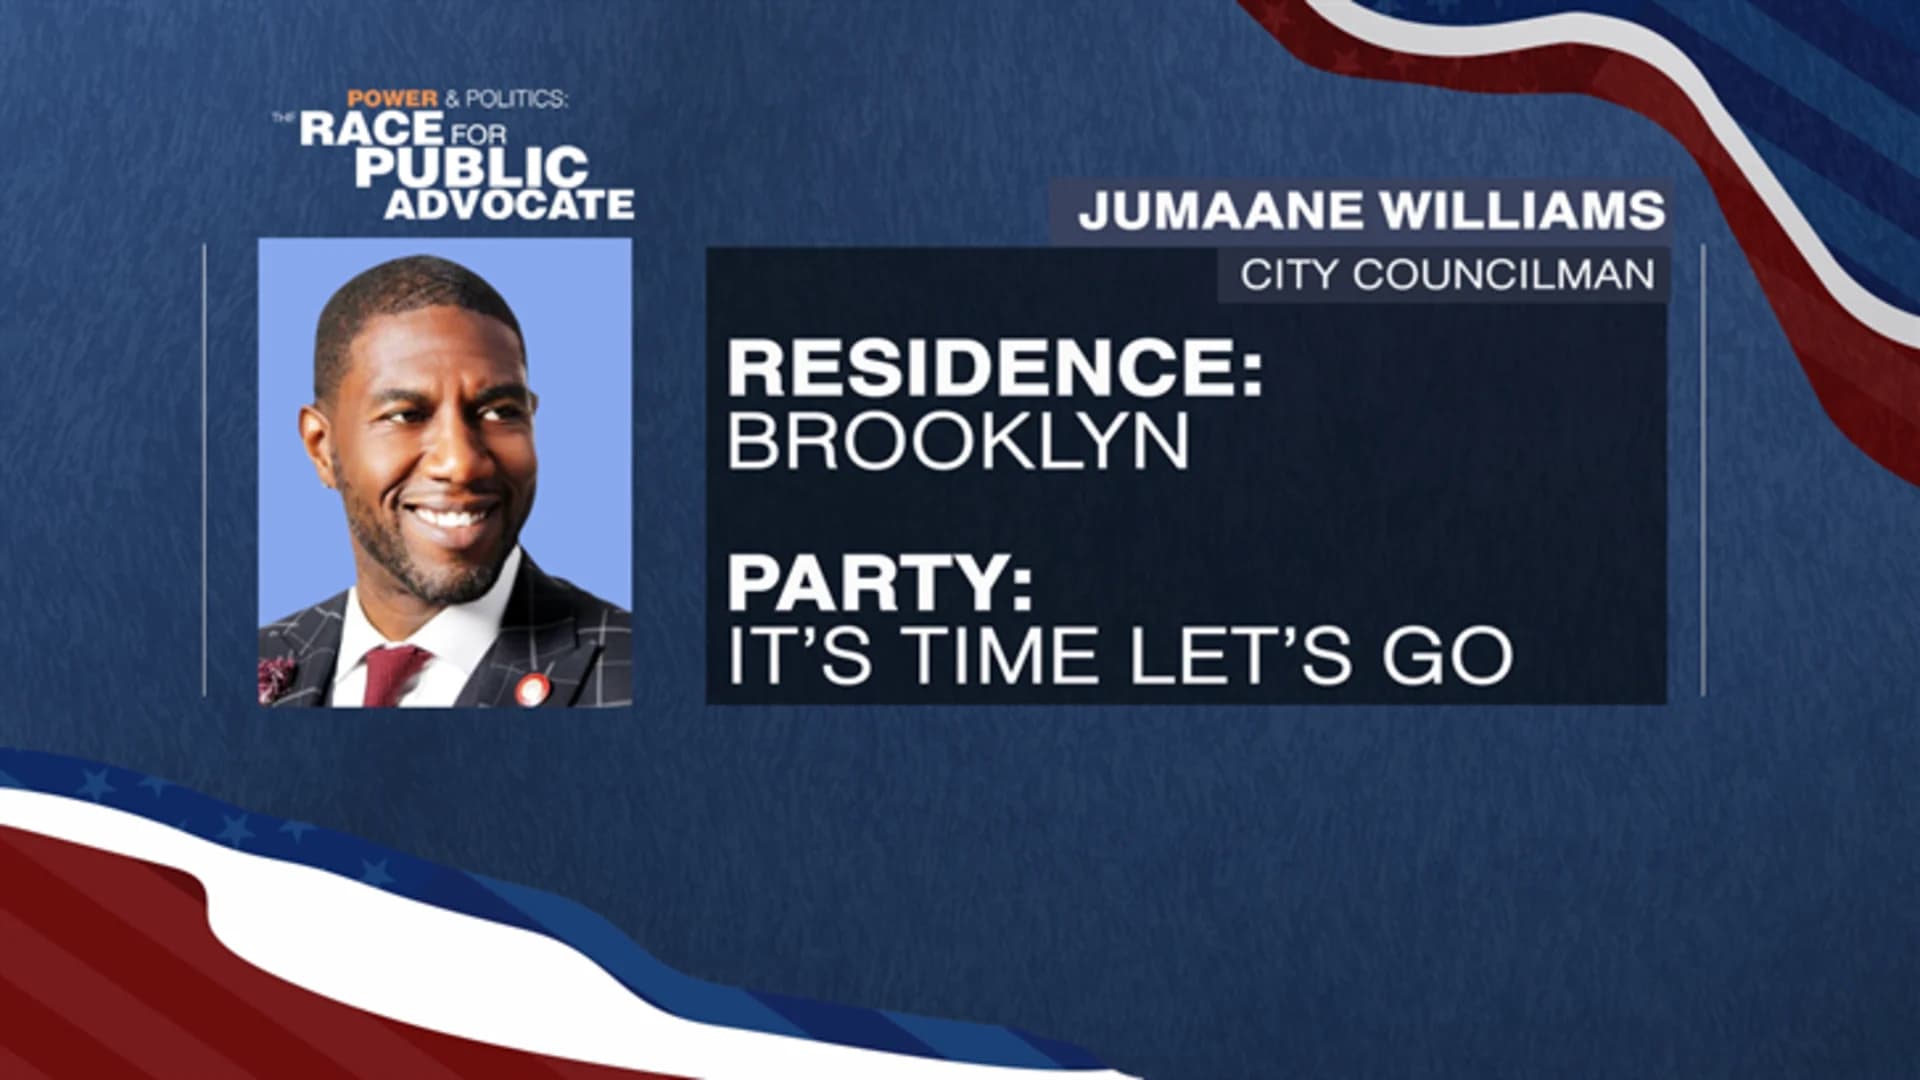 Jumaane Williams - It's Time Let's Go